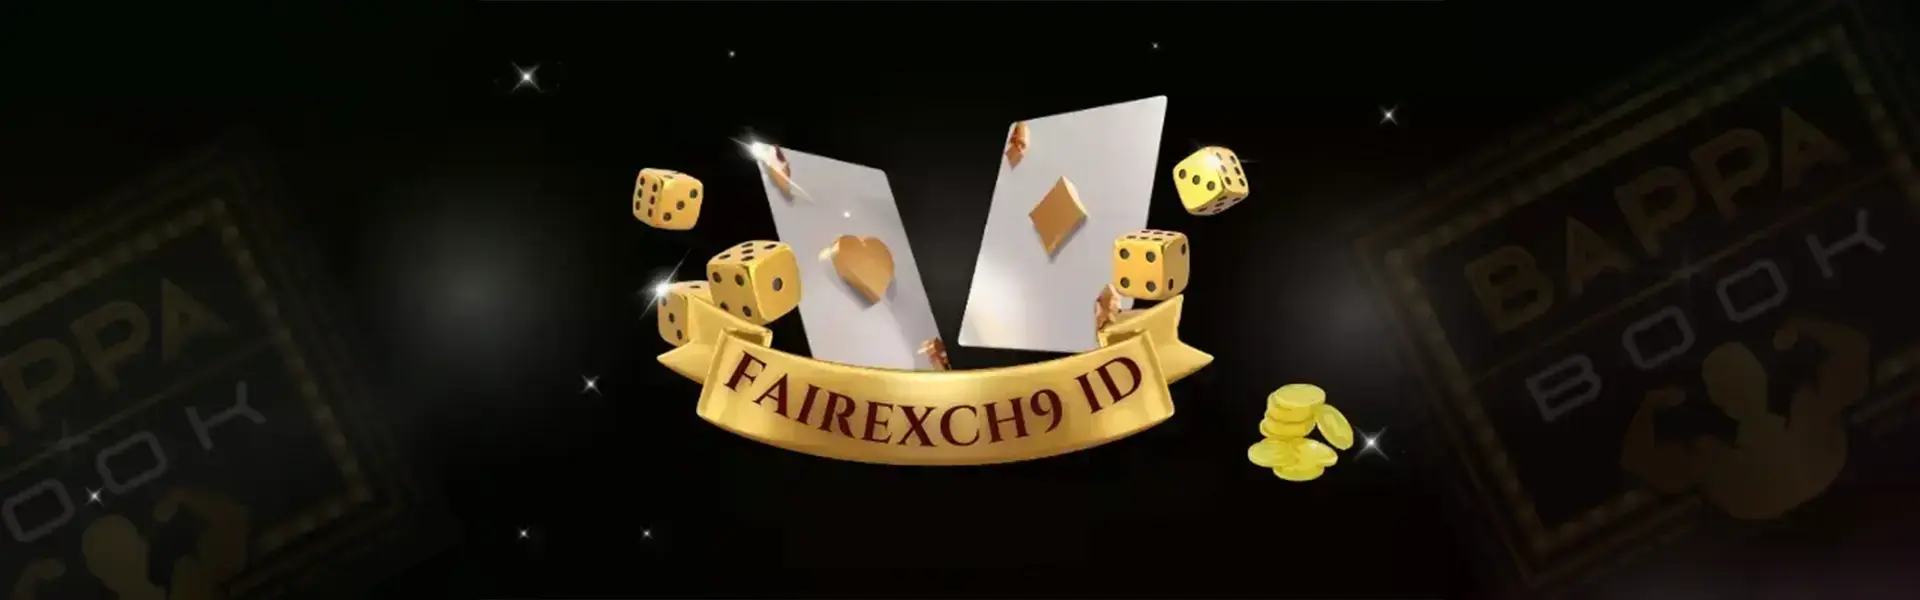 tigerexchmahadevbook Fairexch9 New ID 